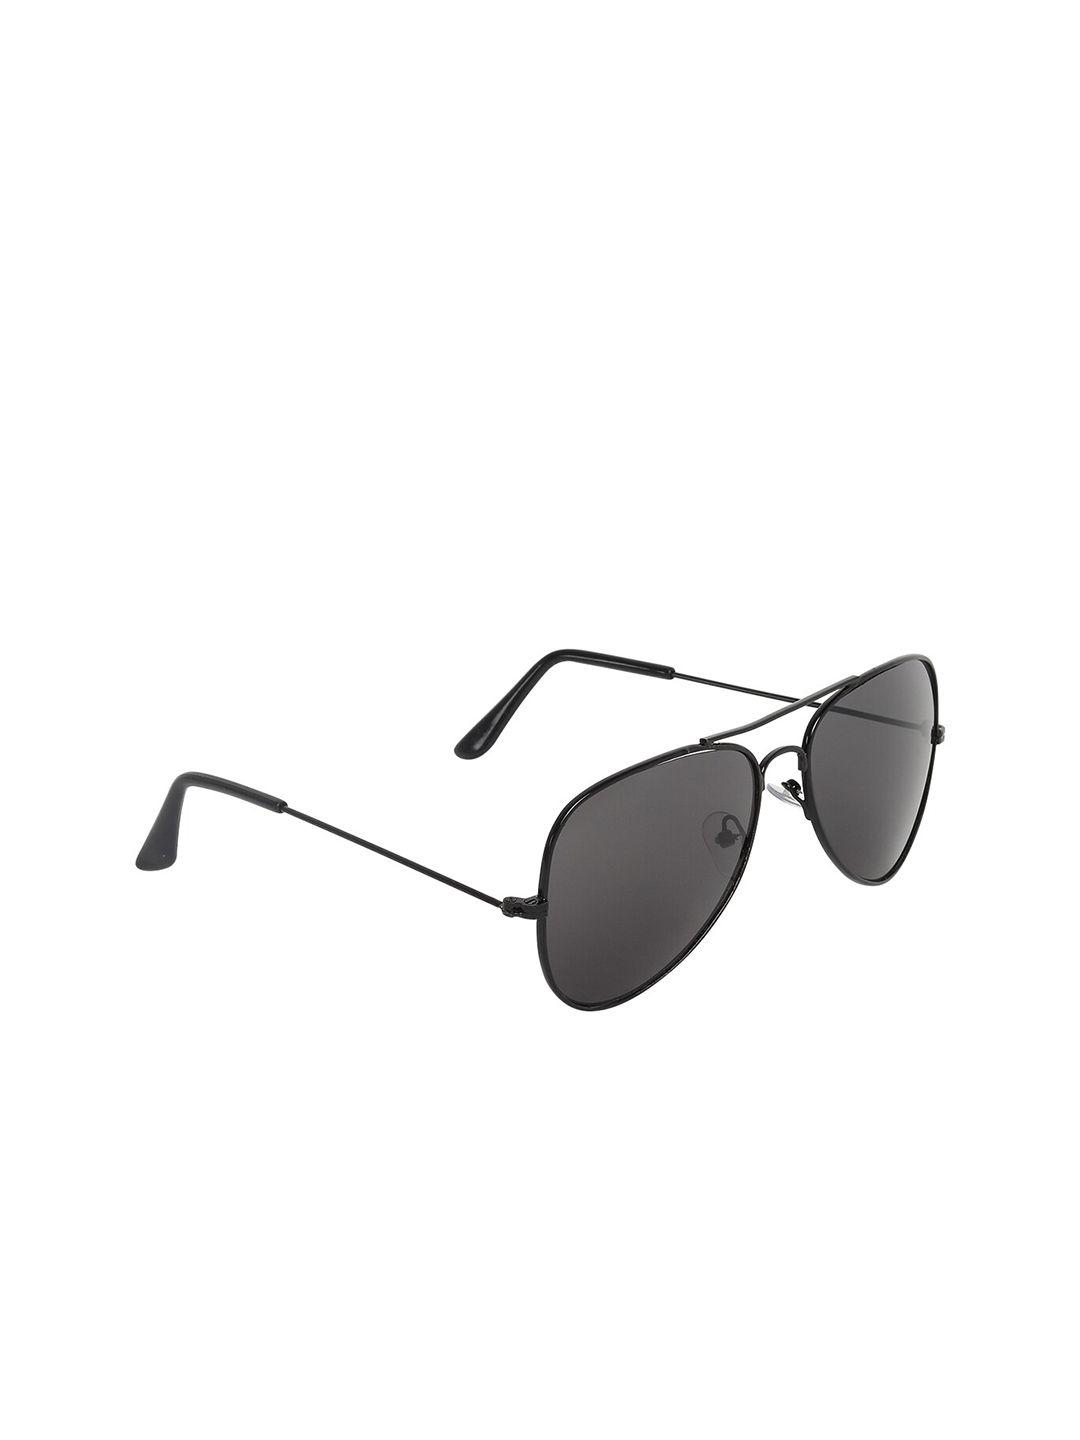 CRIBA Unisex Black Lens & Black Aviator Sunglasses with UV Protected Lens Price in India